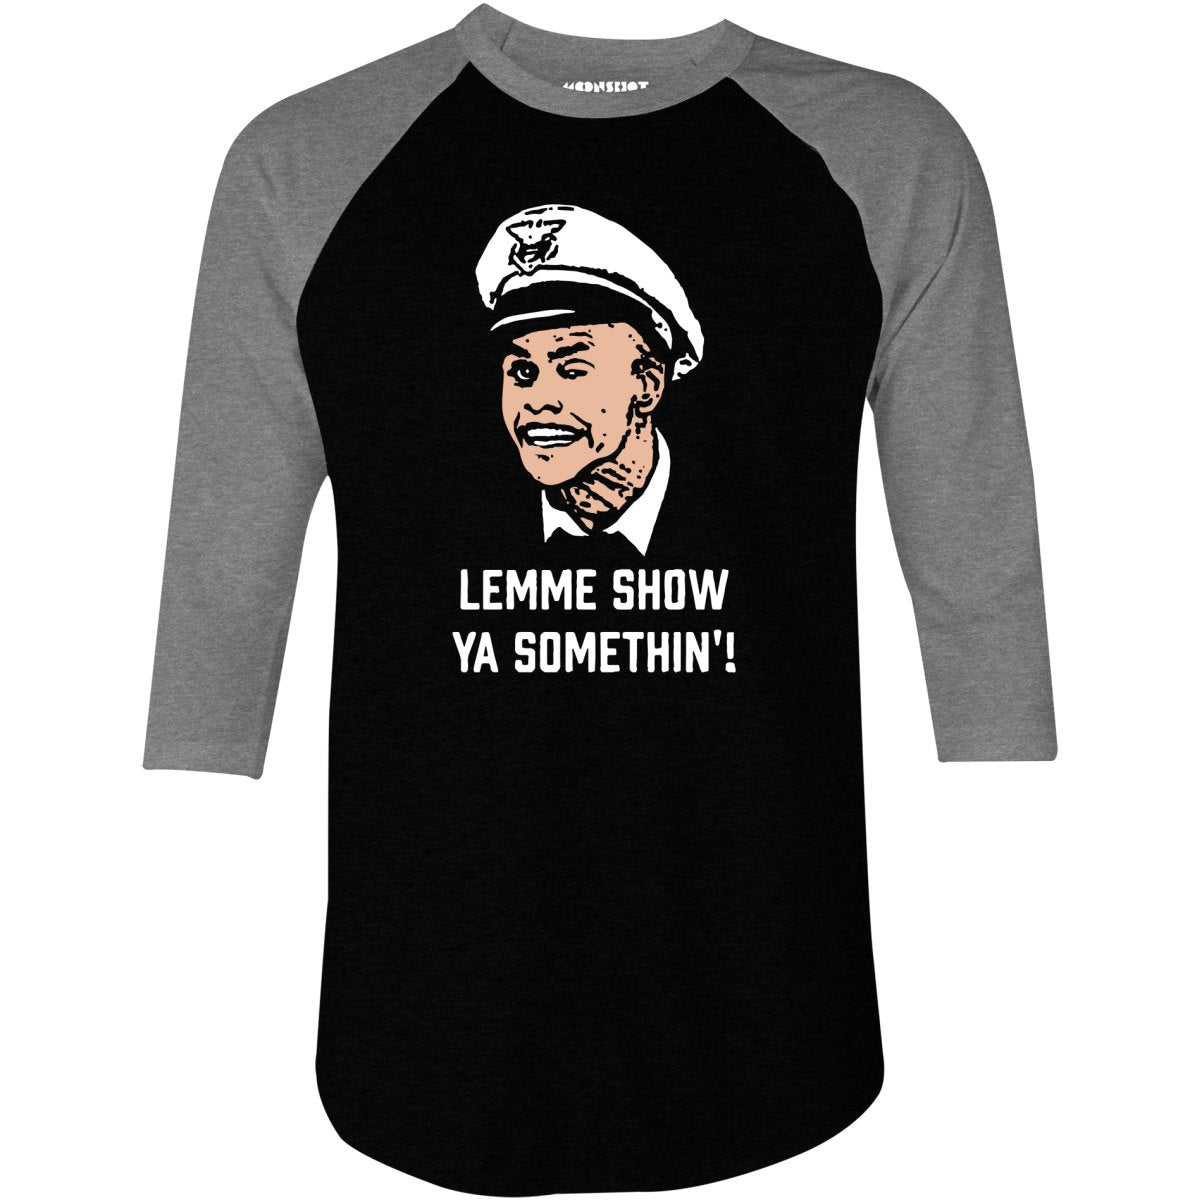 Lemme Show Ya Somethin'! - 3/4 Sleeve Raglan T-Shirt